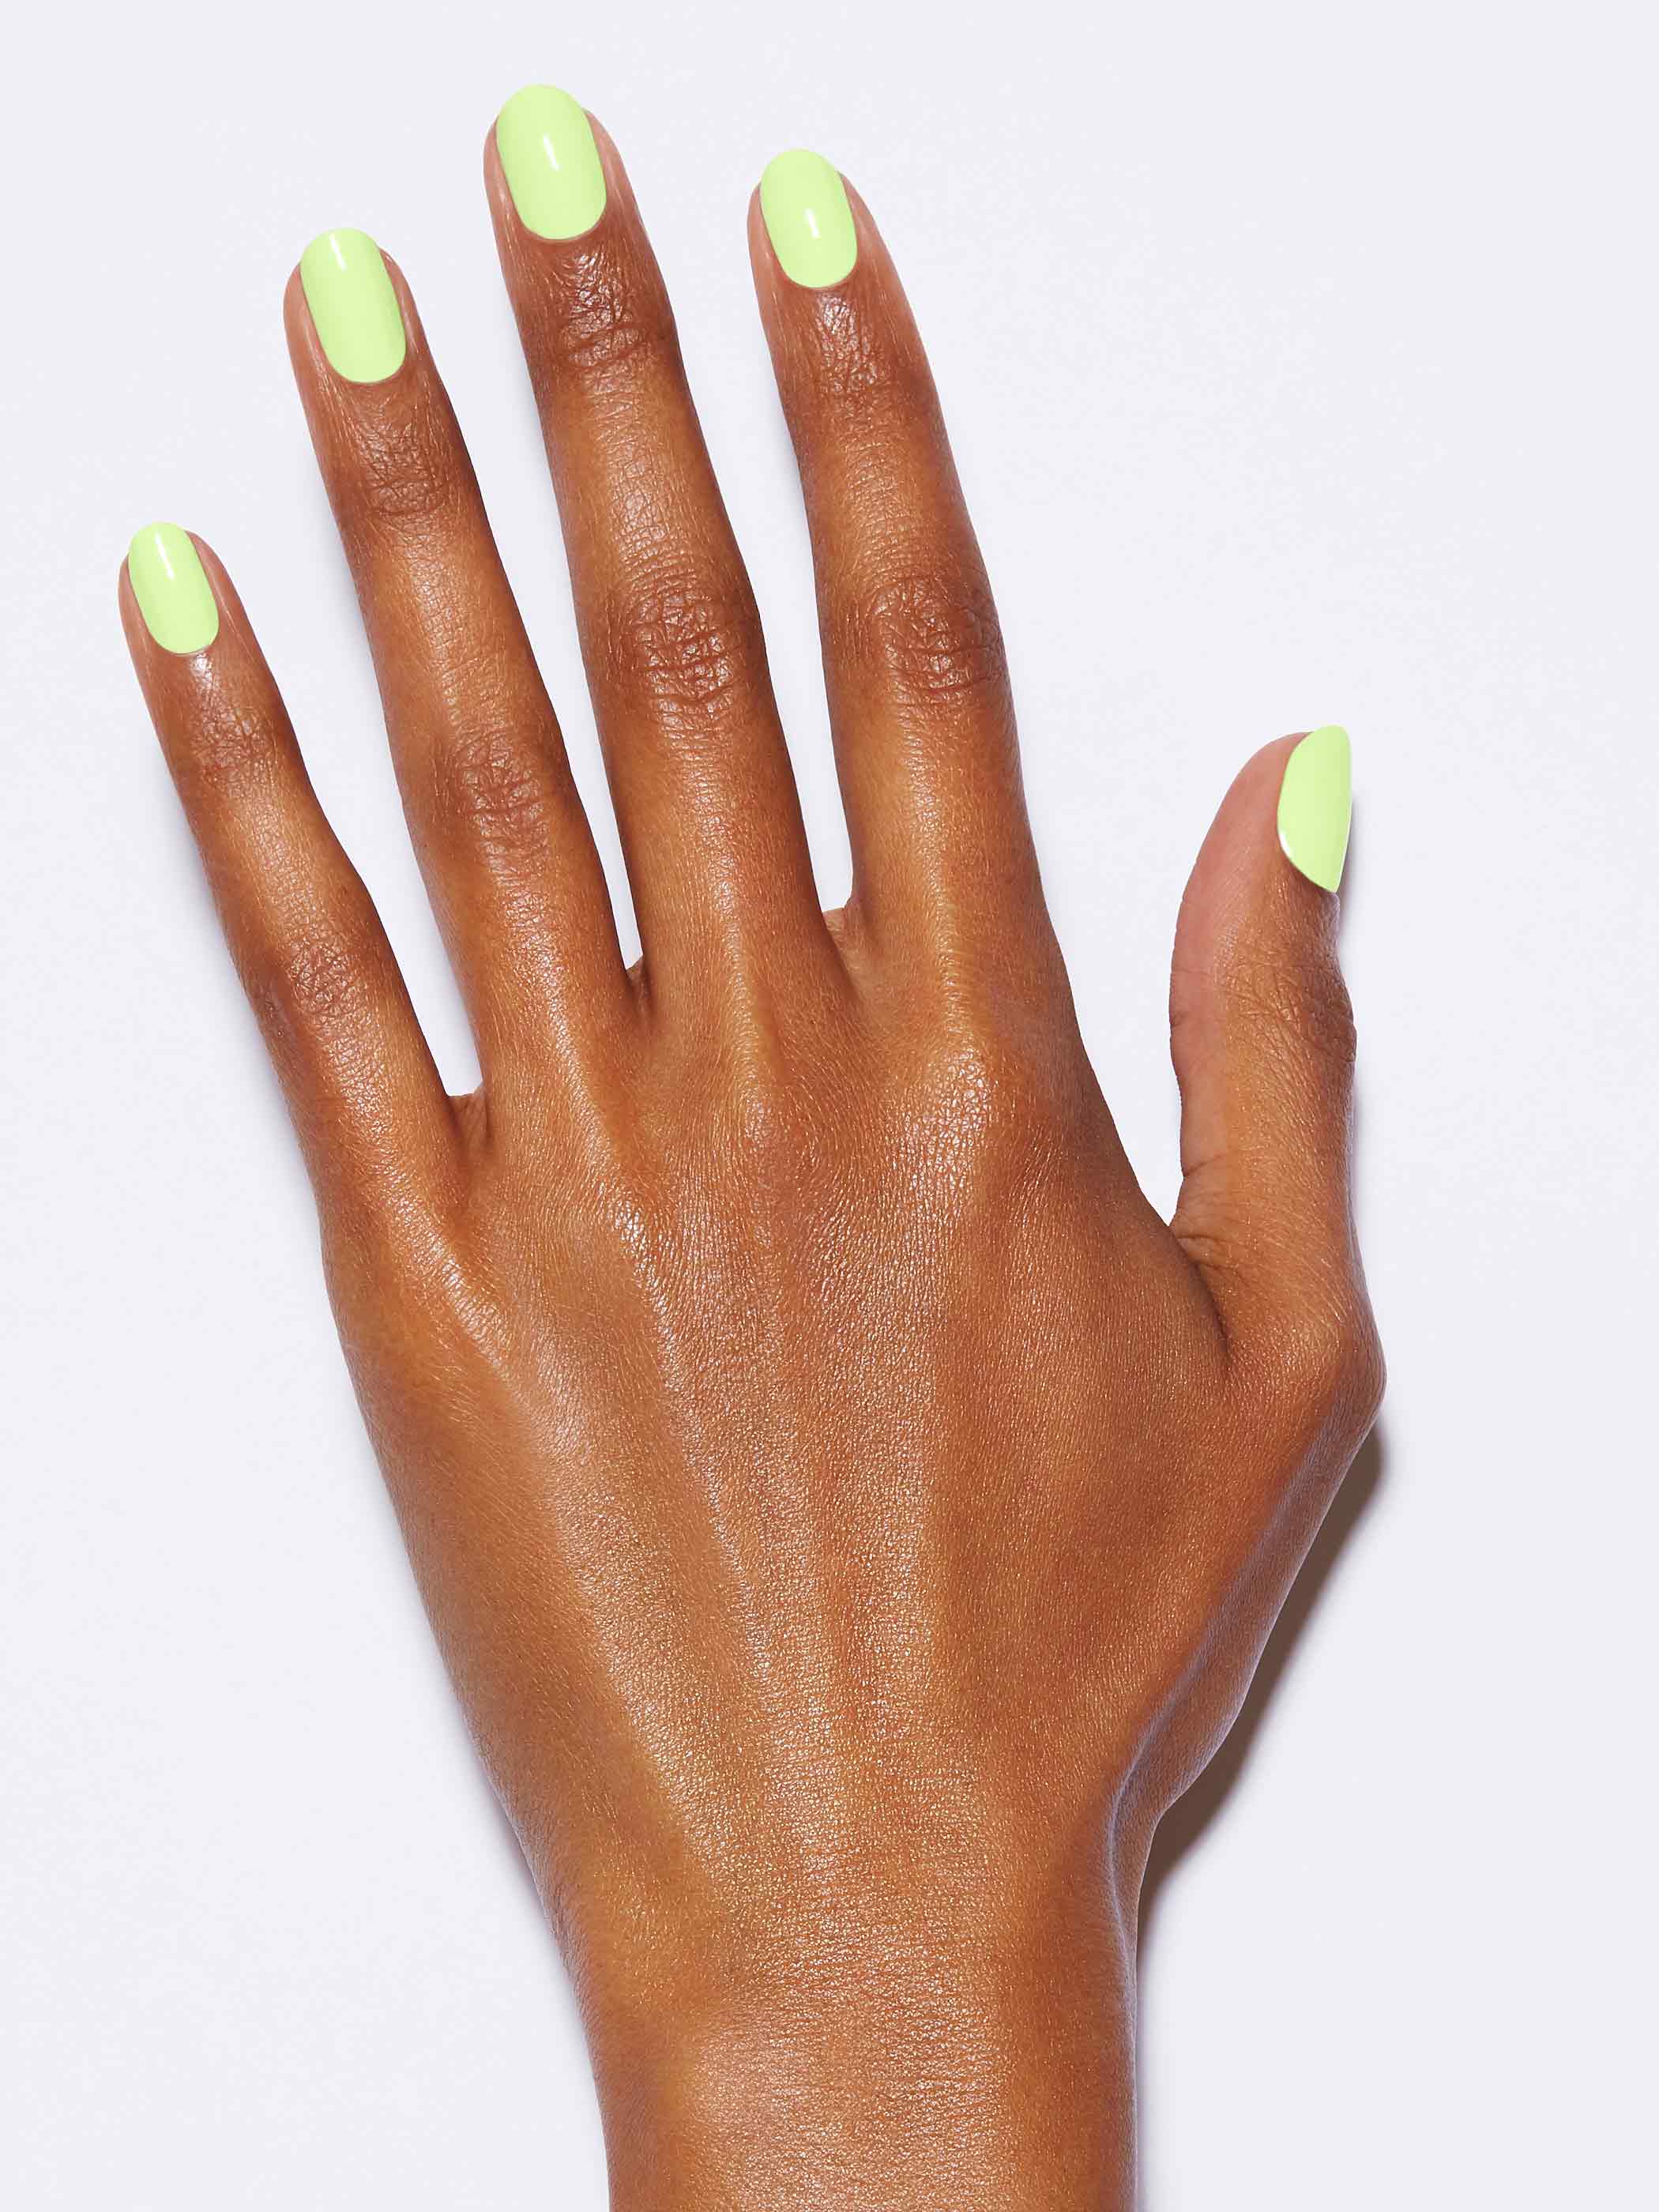 Neon pastel yellow/green full-coverage nail polish, Rich